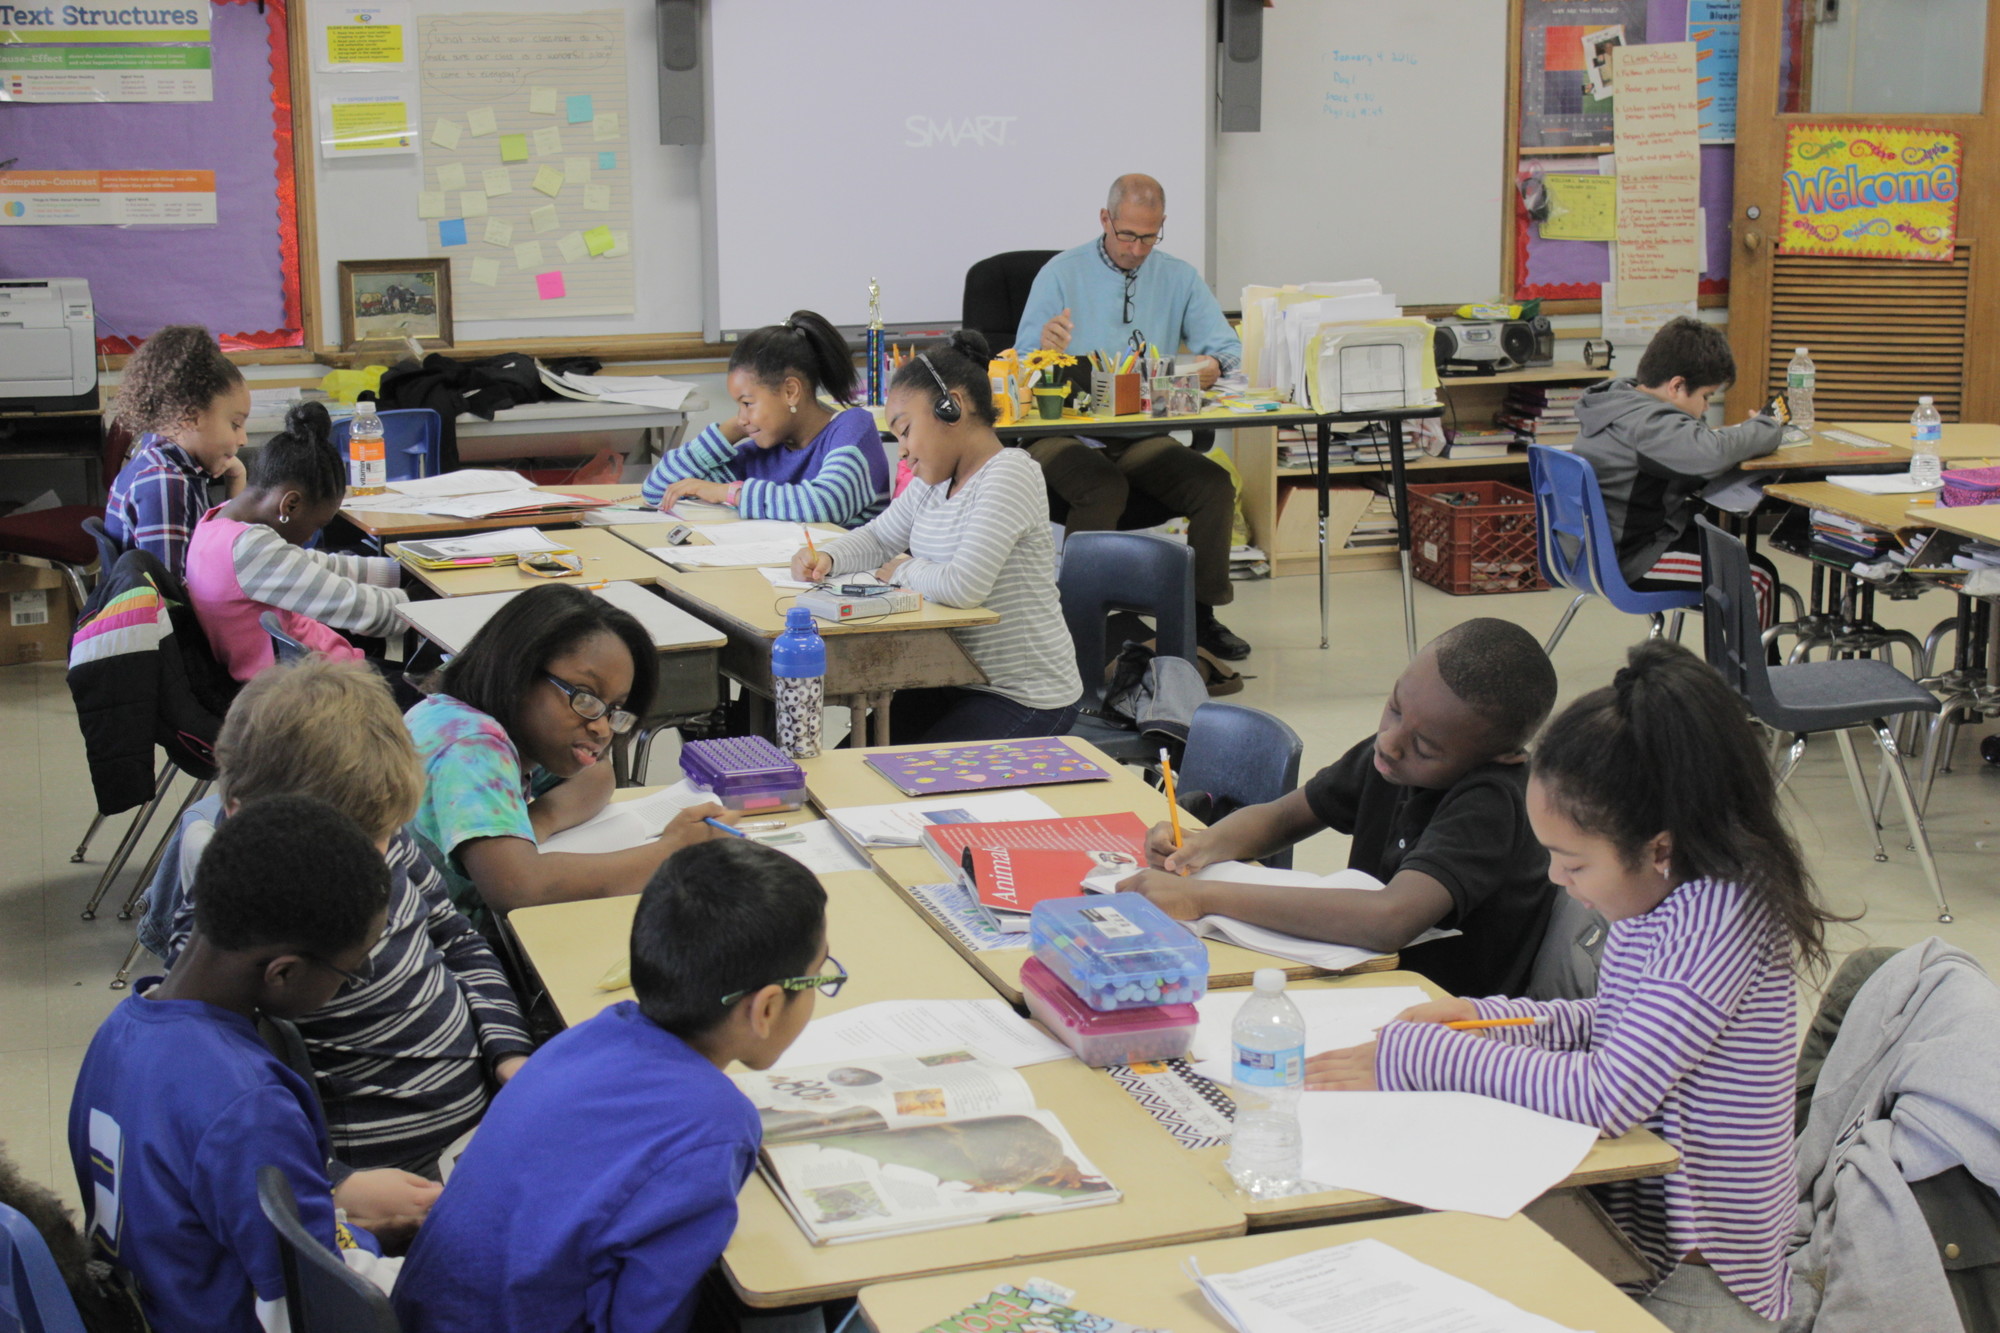 David LeWinter’s fifth grade class at the William L. Buck School has desks arranged in table configurations.